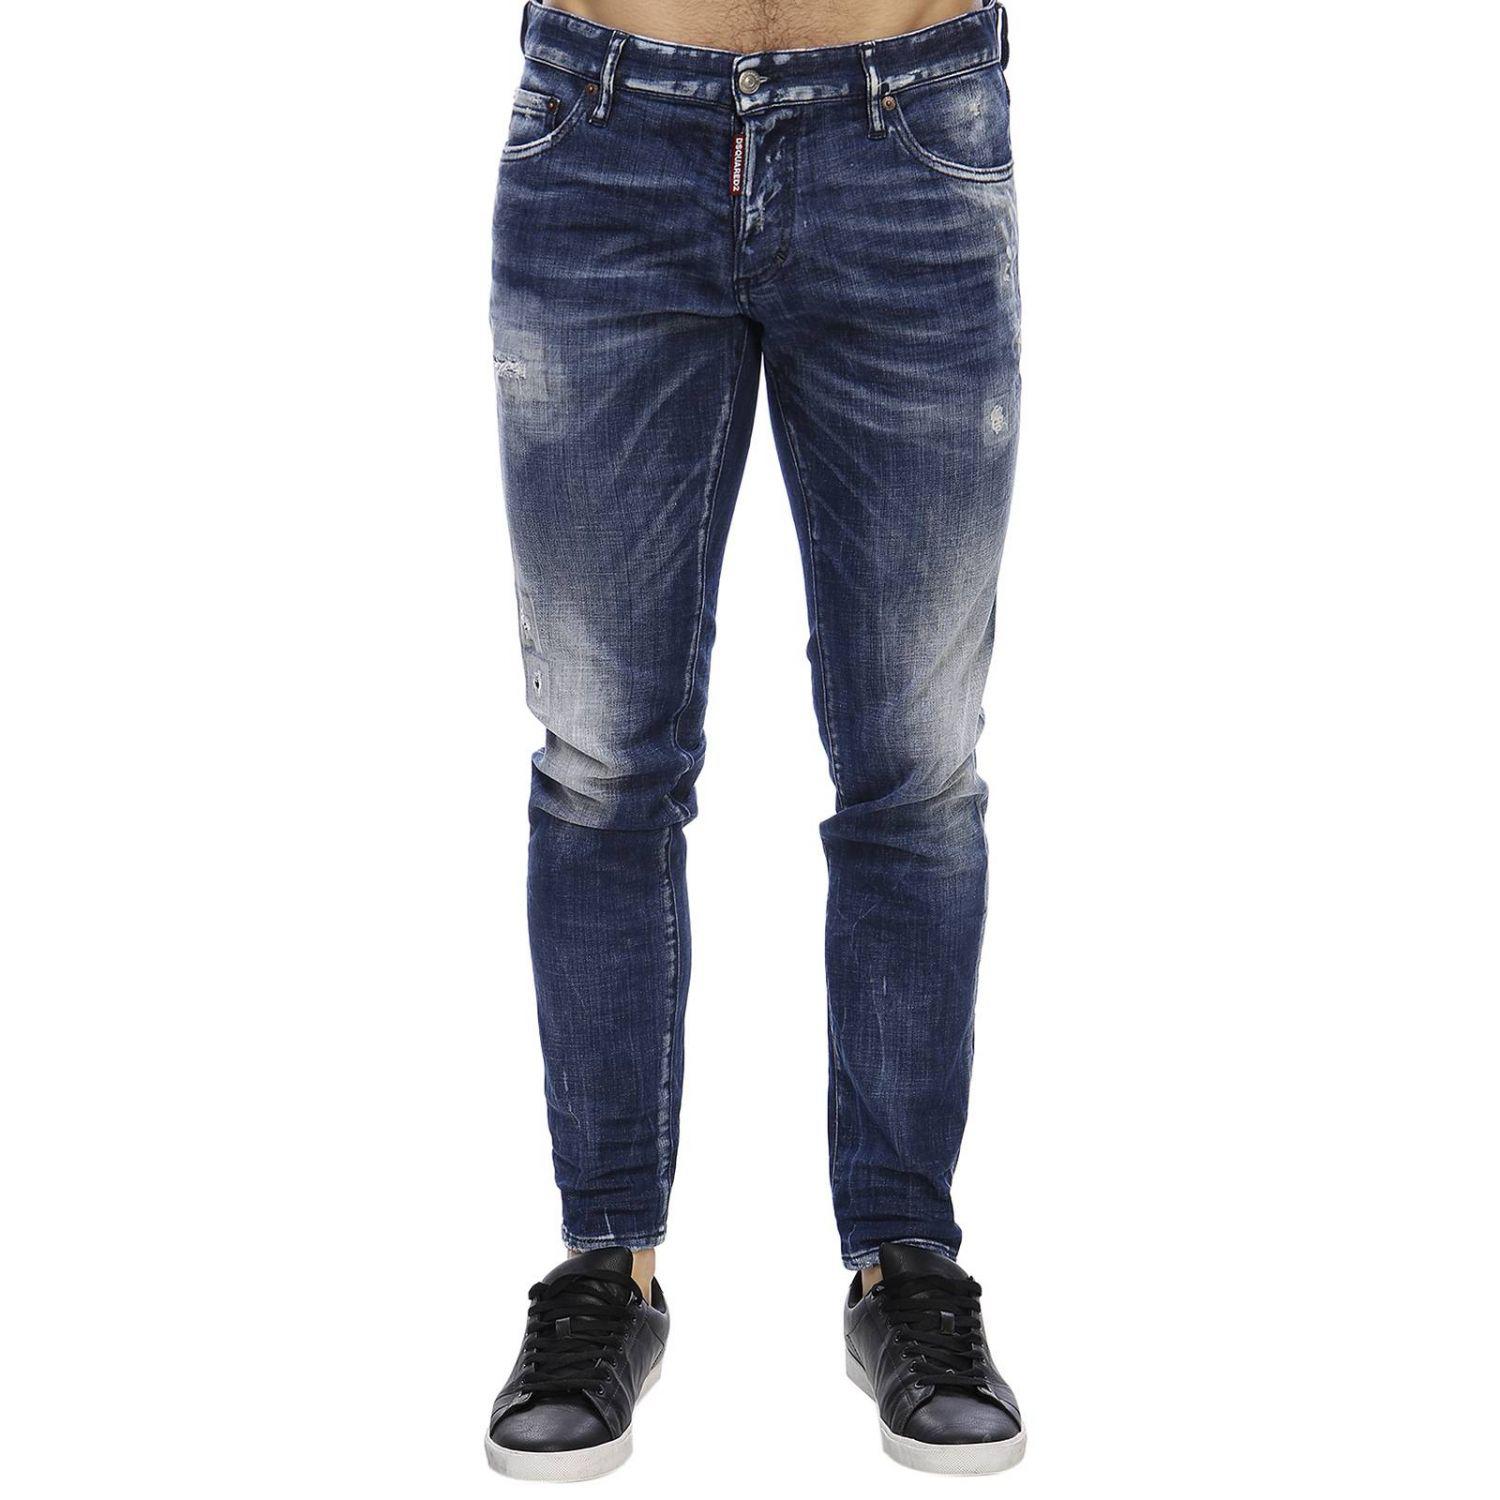 DSquared² Denim Men's Jeans in Blue for Men - Lyst